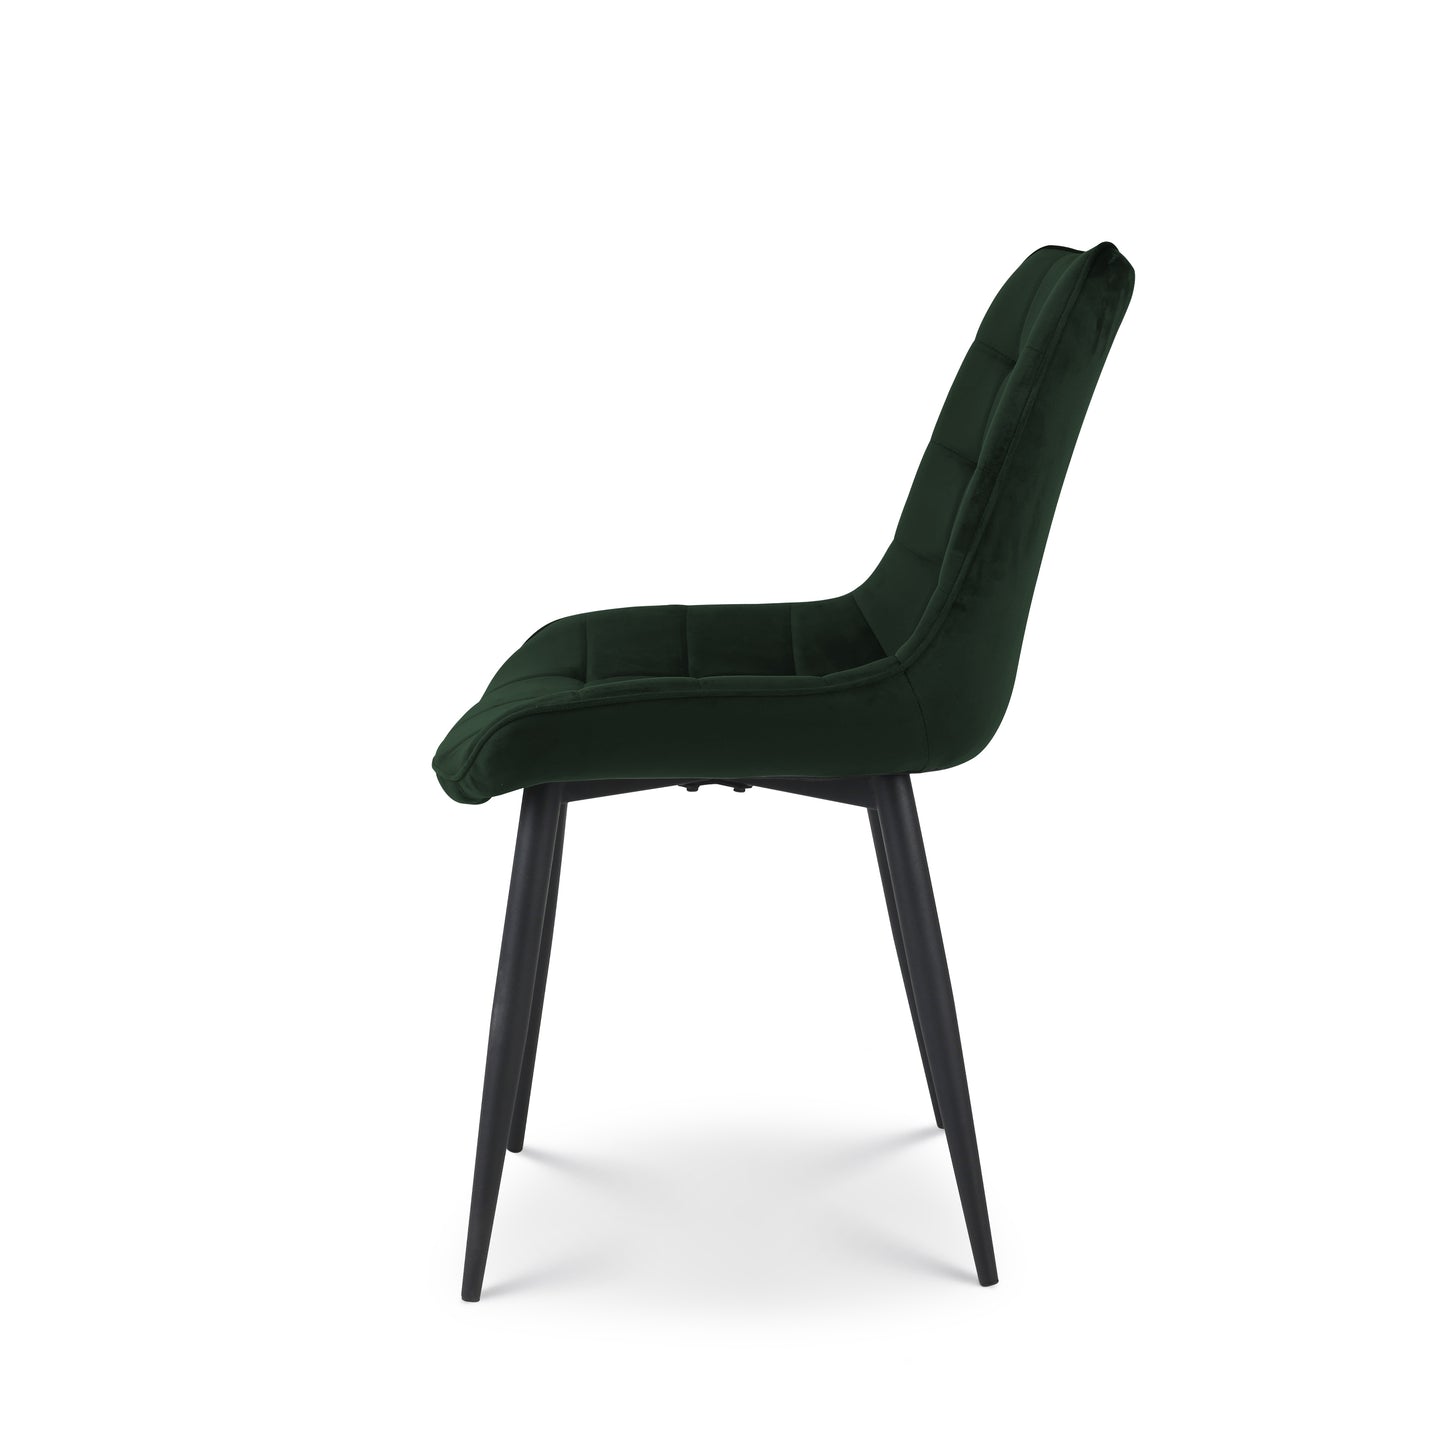 Chaise Moderne en Tissu Velours Vert Foncé avec Pieds en Métal